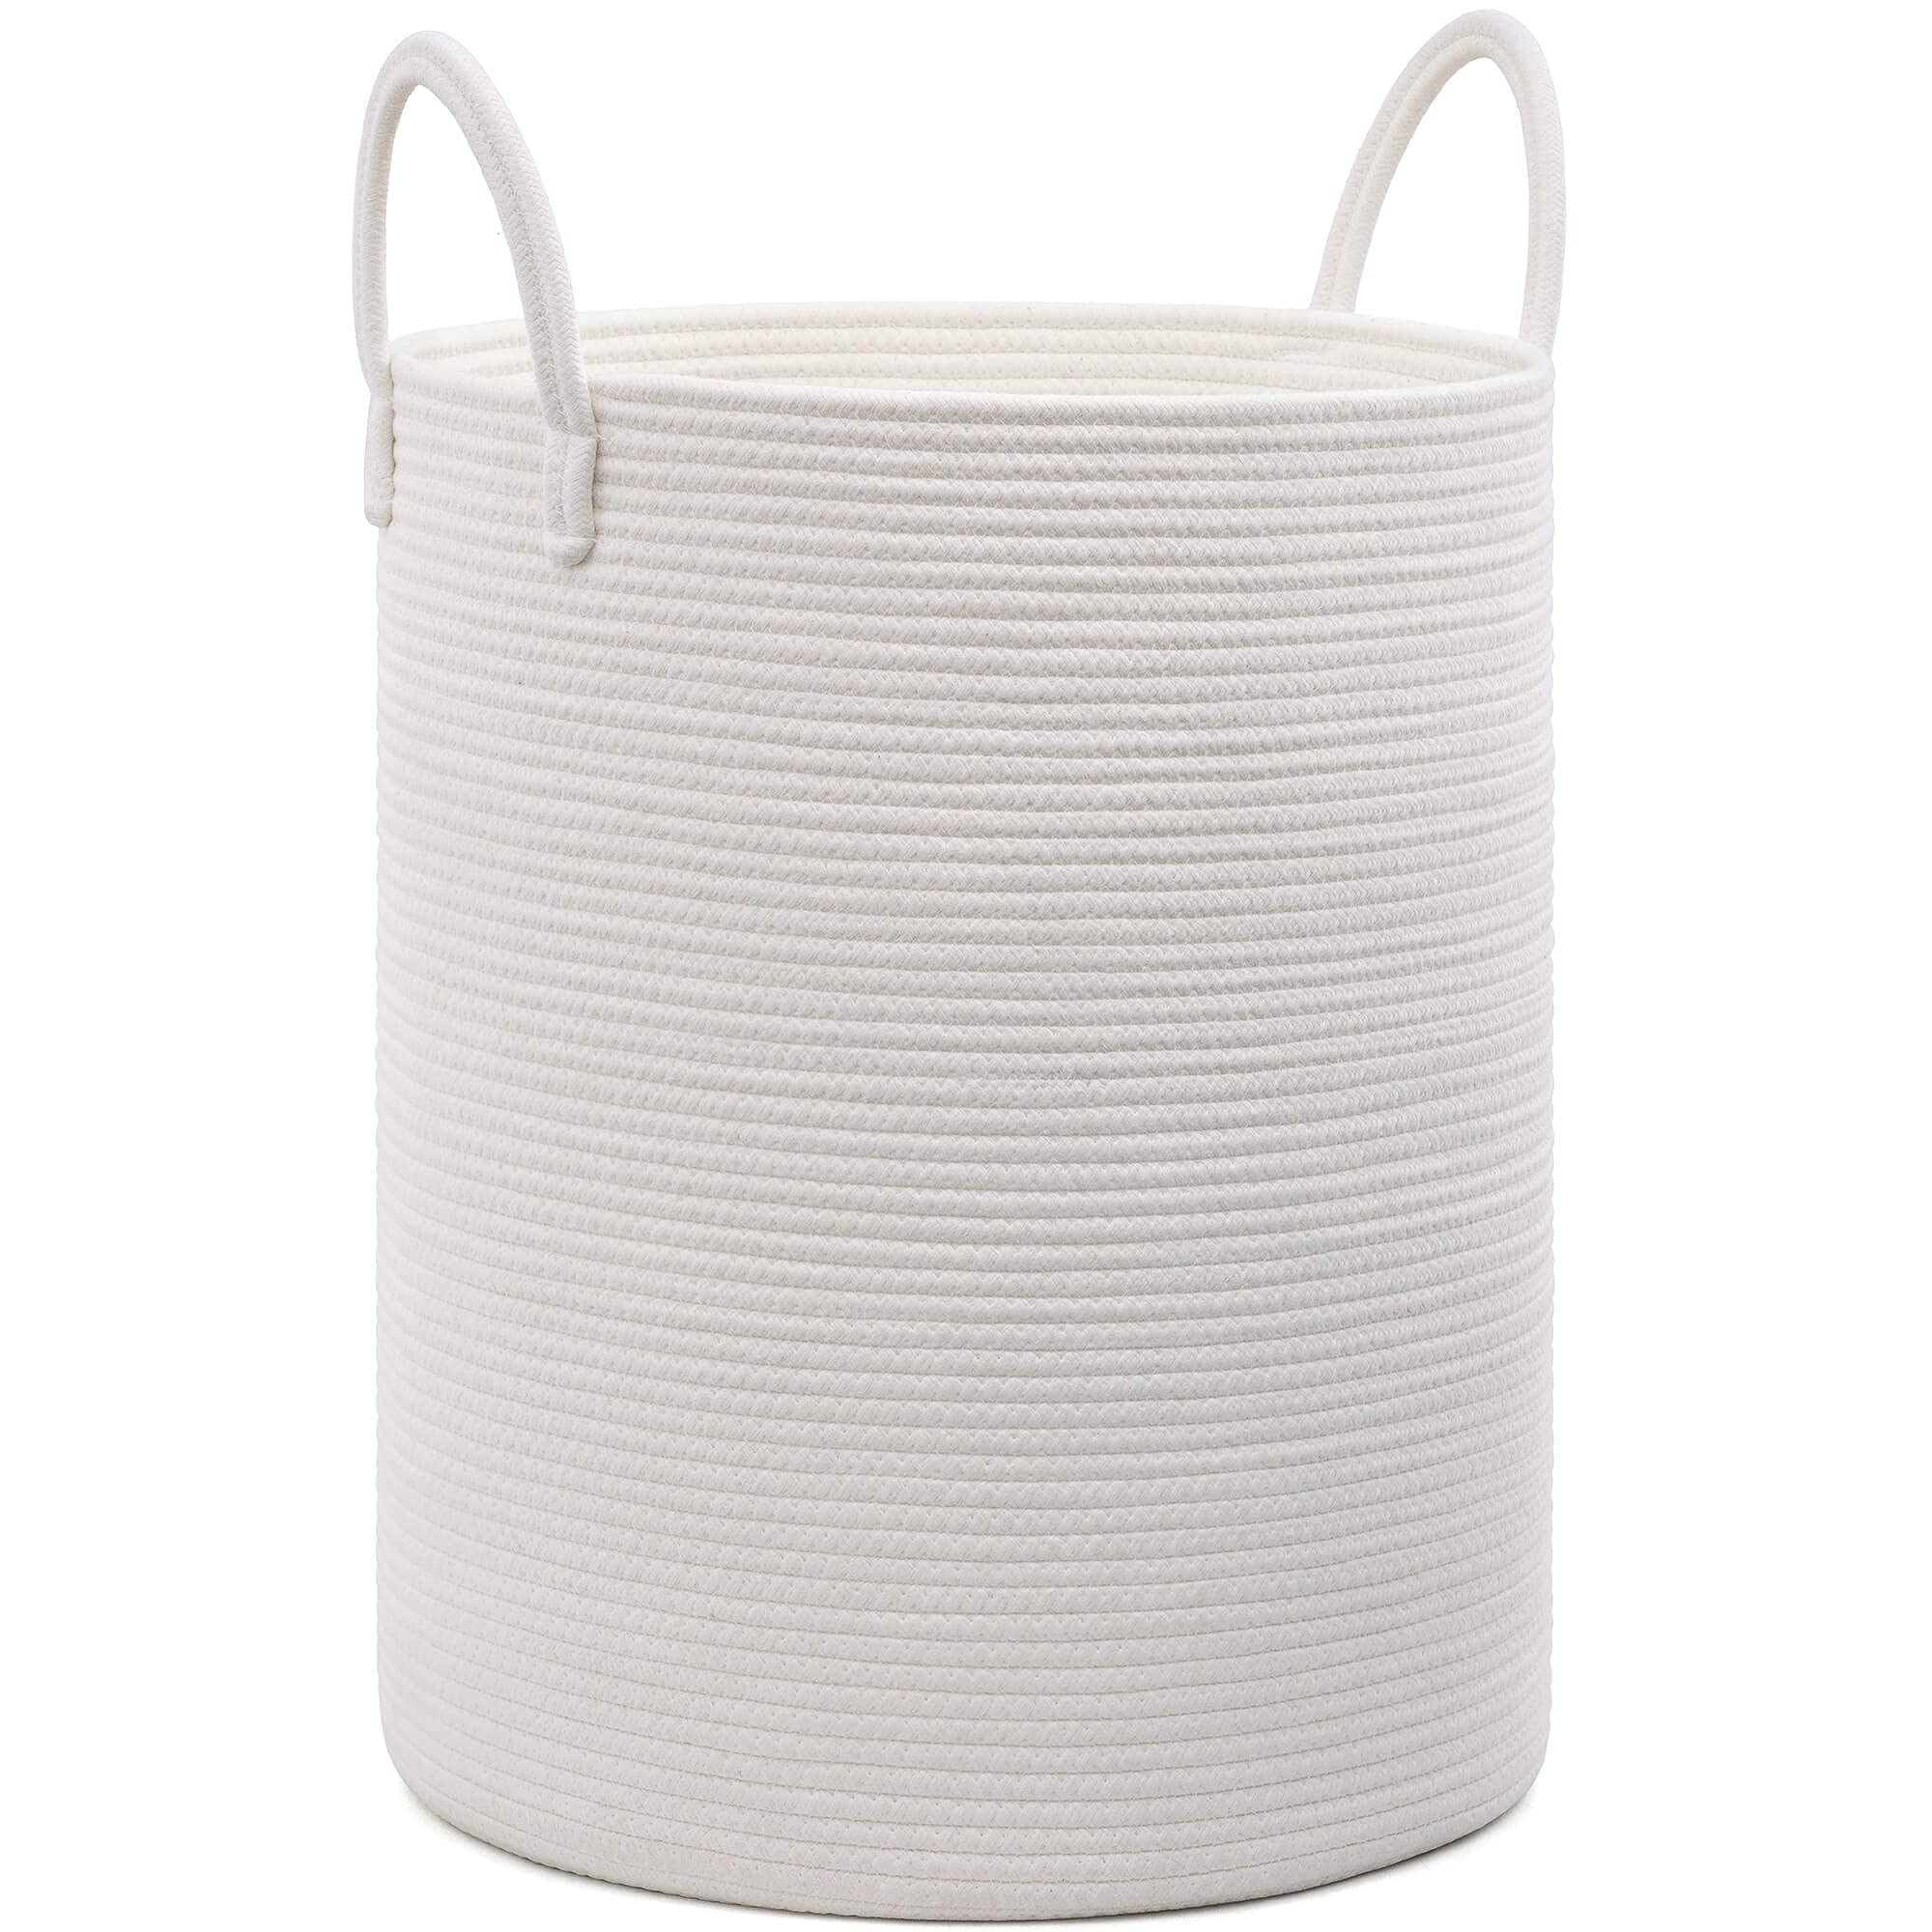 Goodpick White Woven Laundry Basket 66L